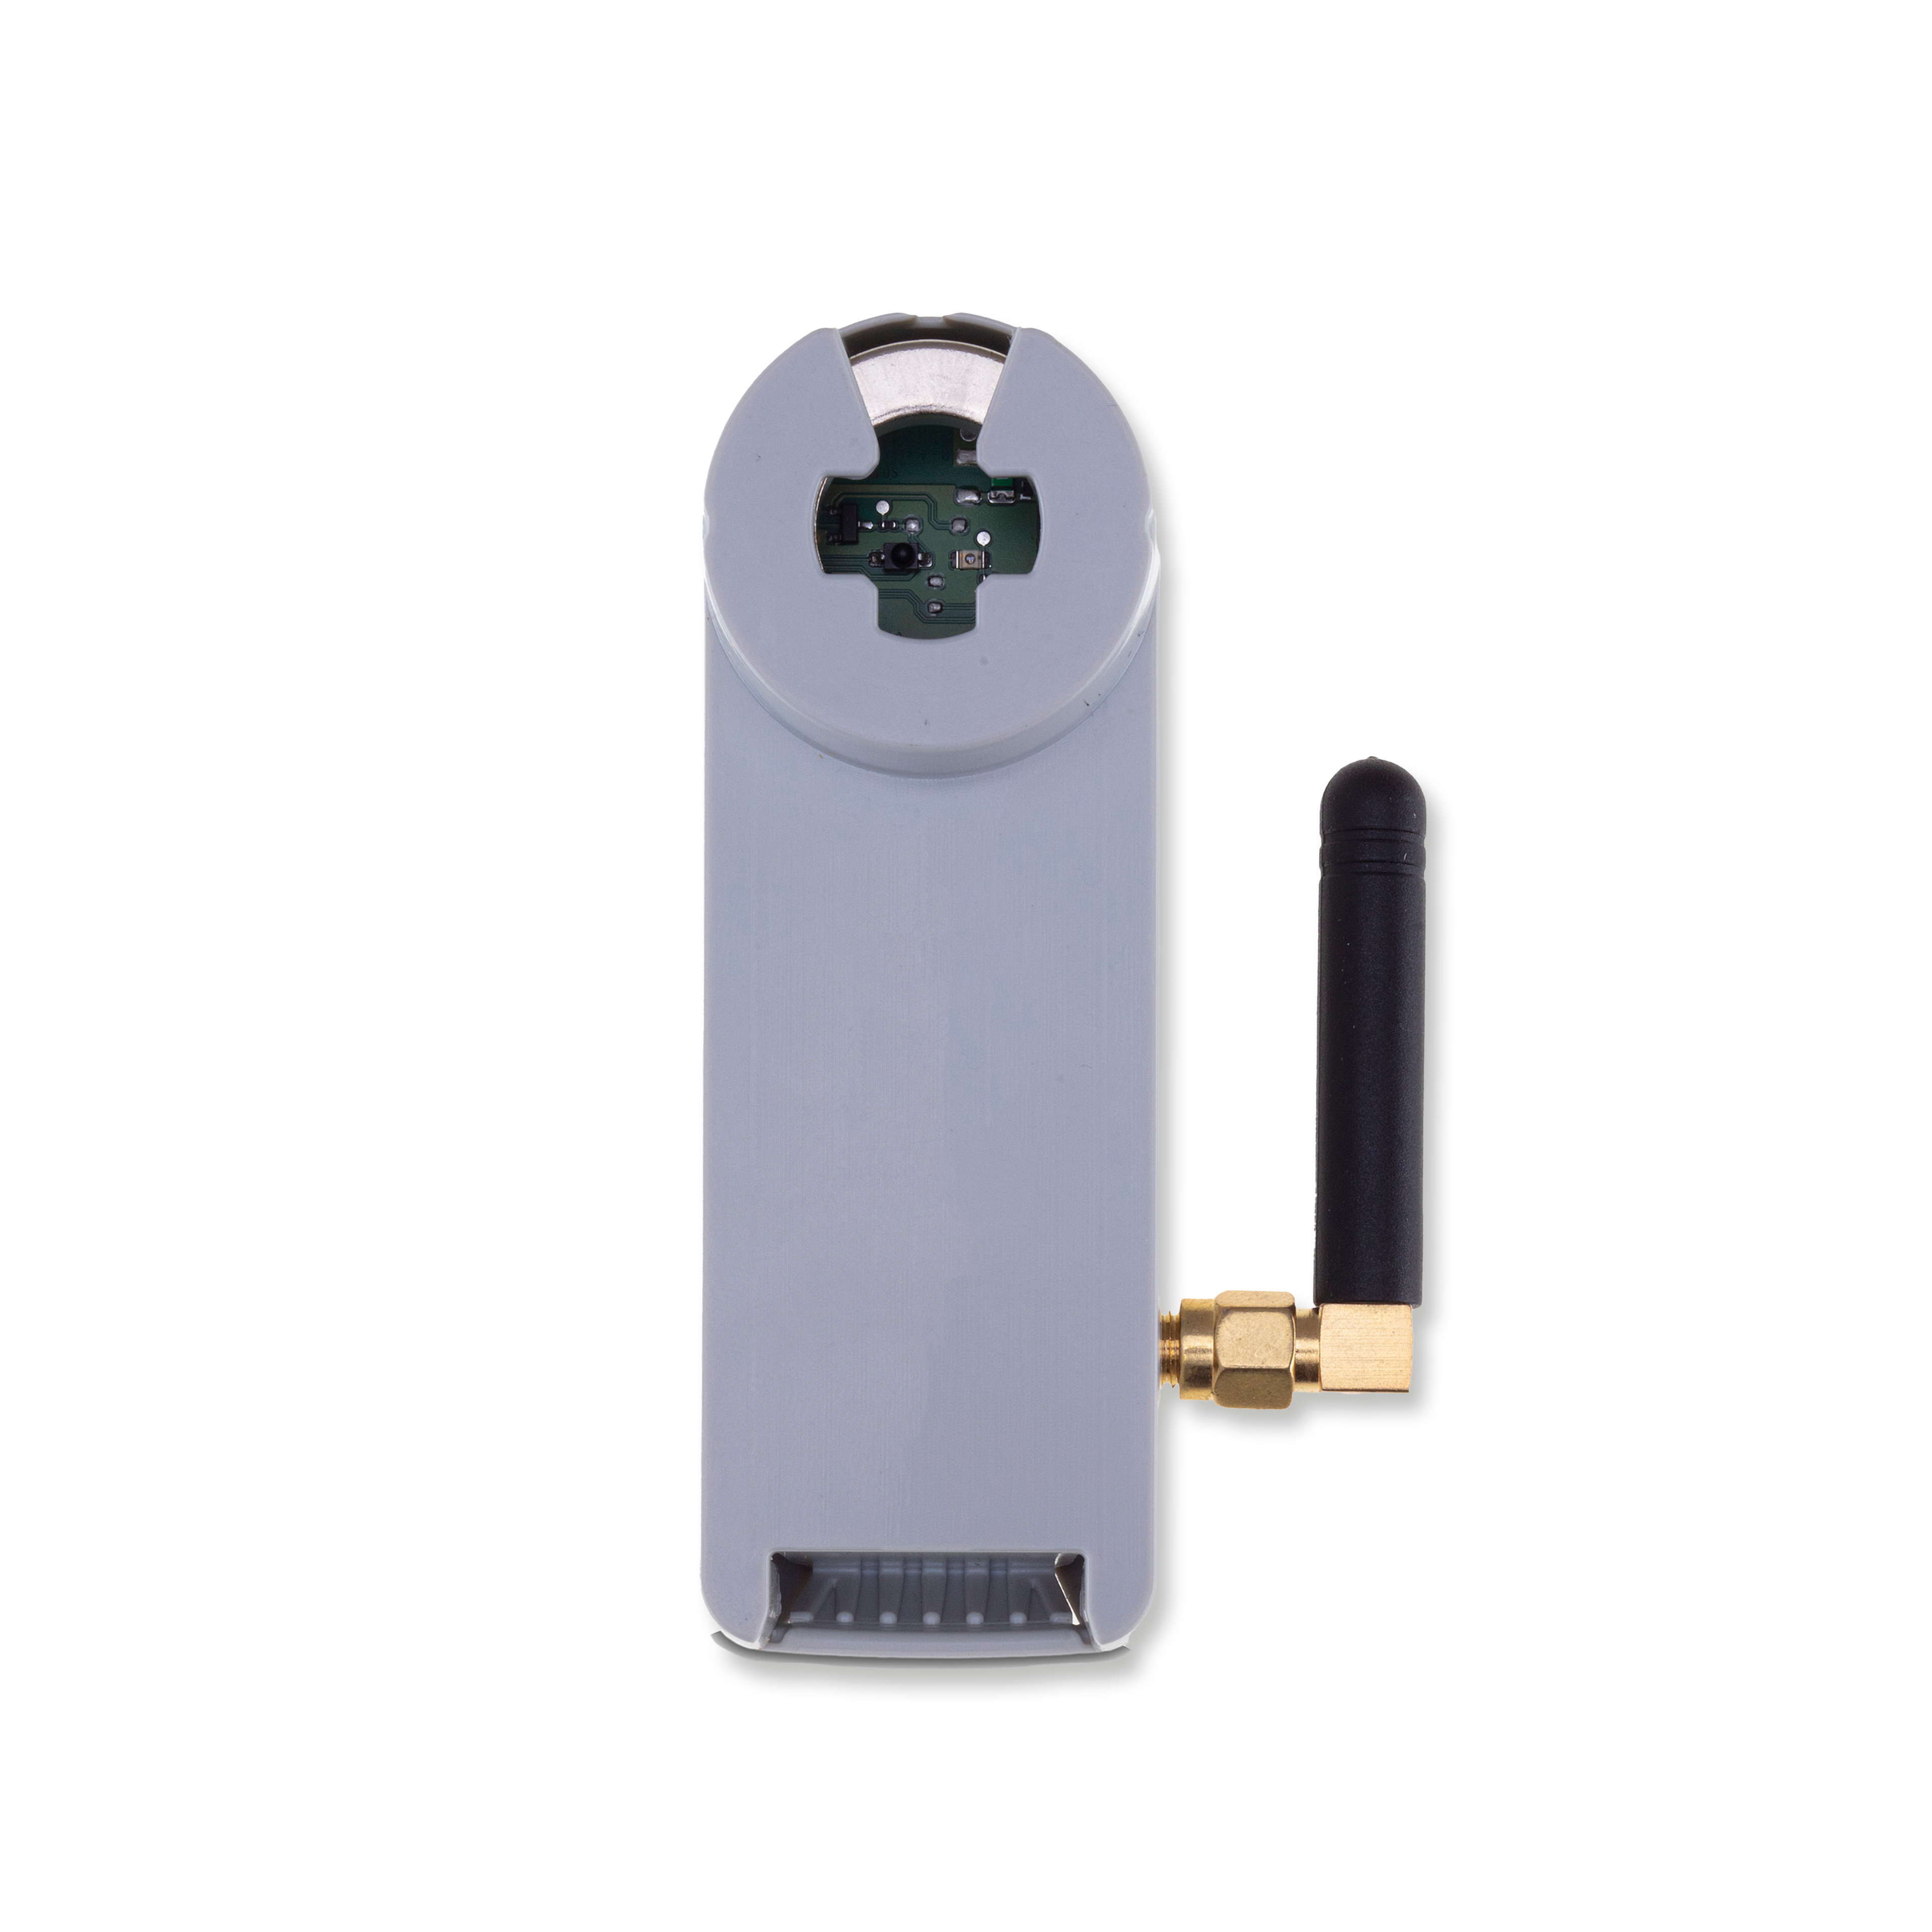 KLAX 2.0 LoRaWAN® Sensor - SML Opto Head for modern electricity meters